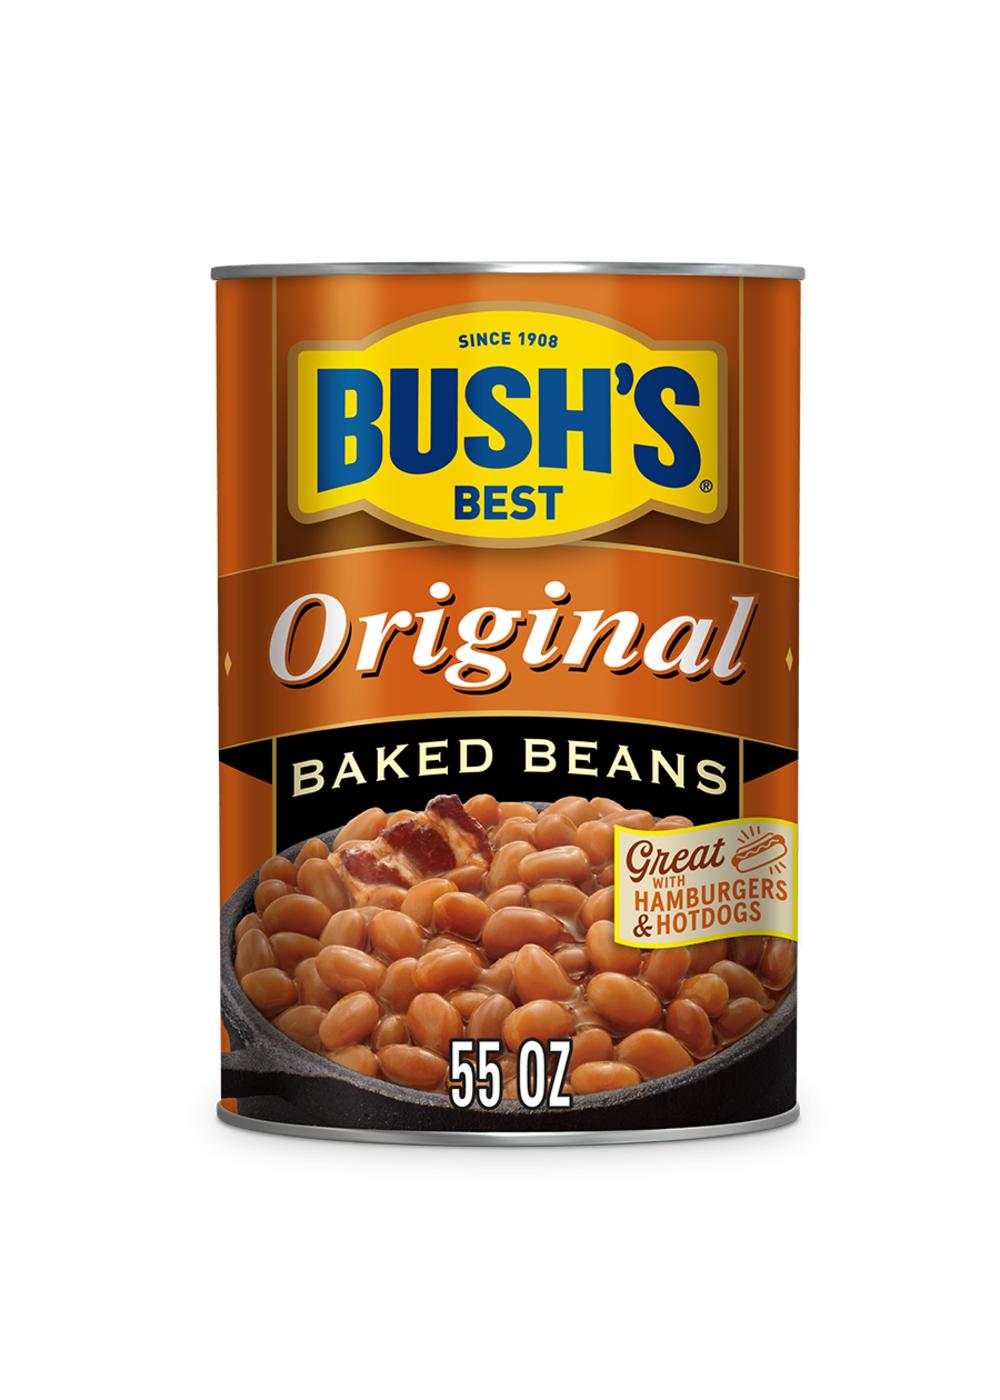 Bush's Best Original Baked Beans; image 1 of 3